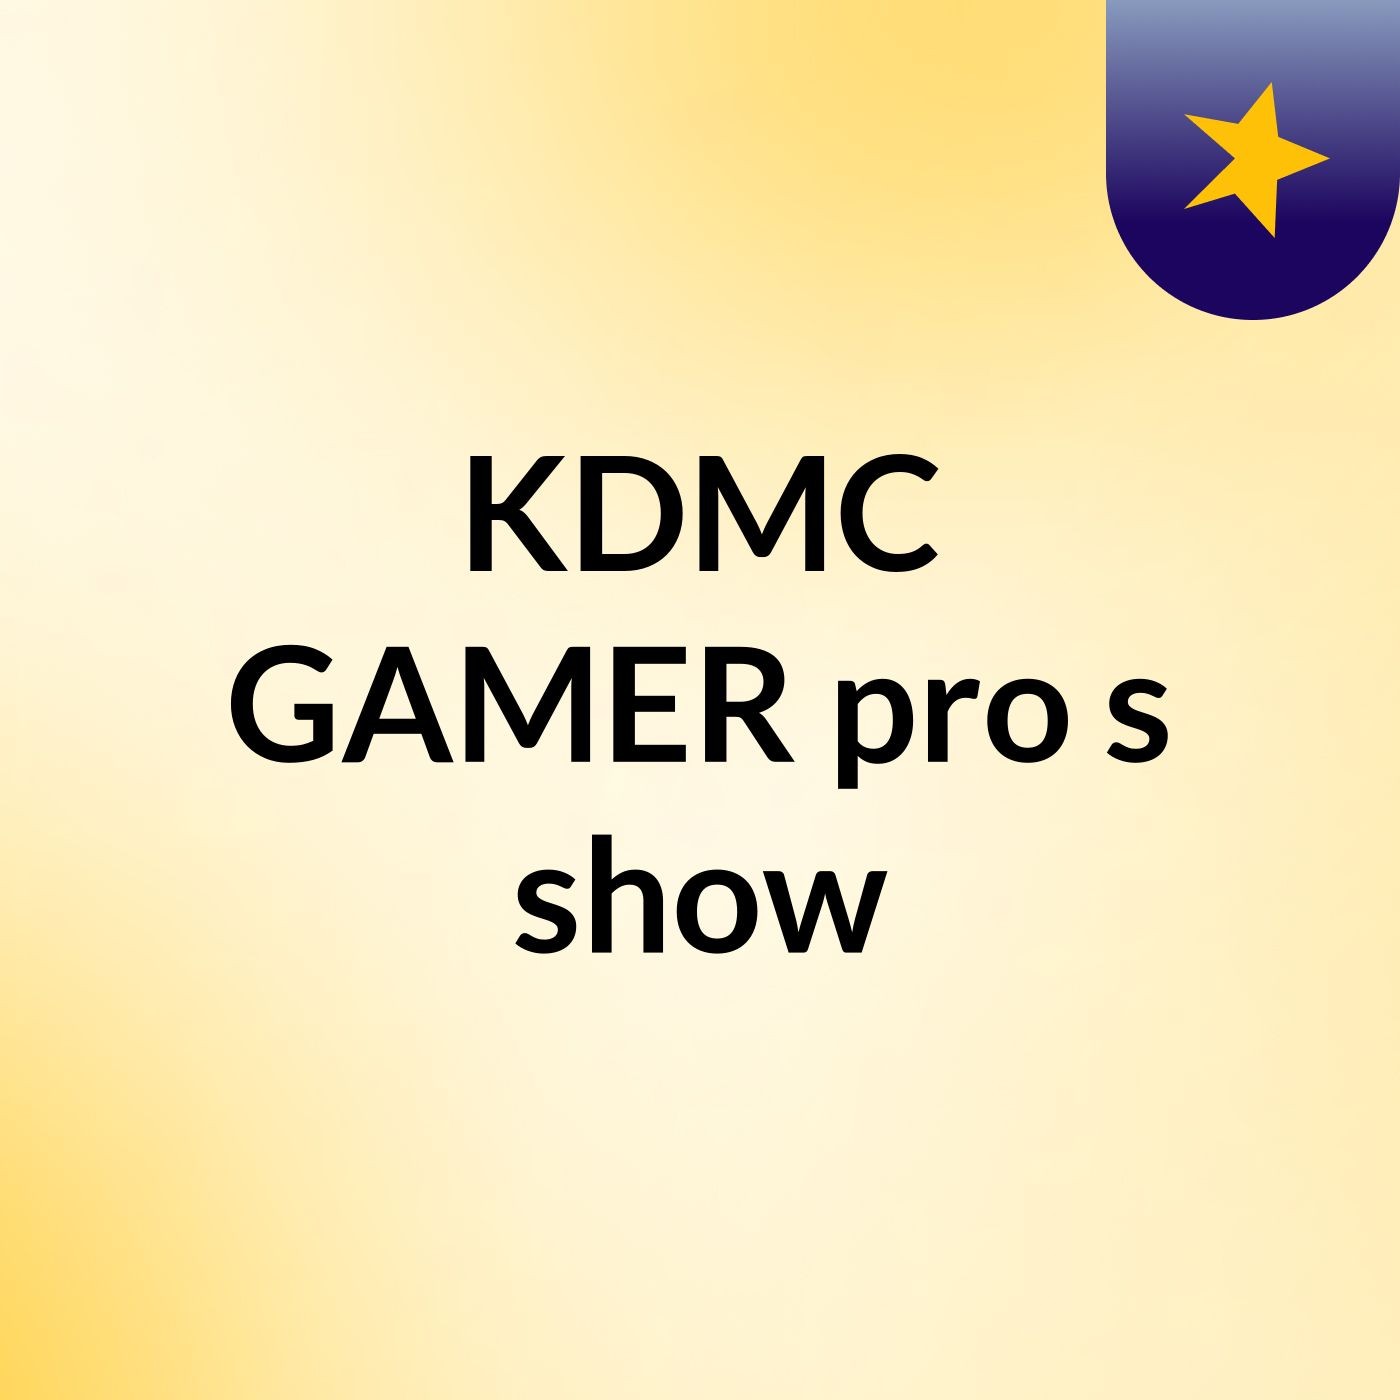 KDMC GAMER pro's show